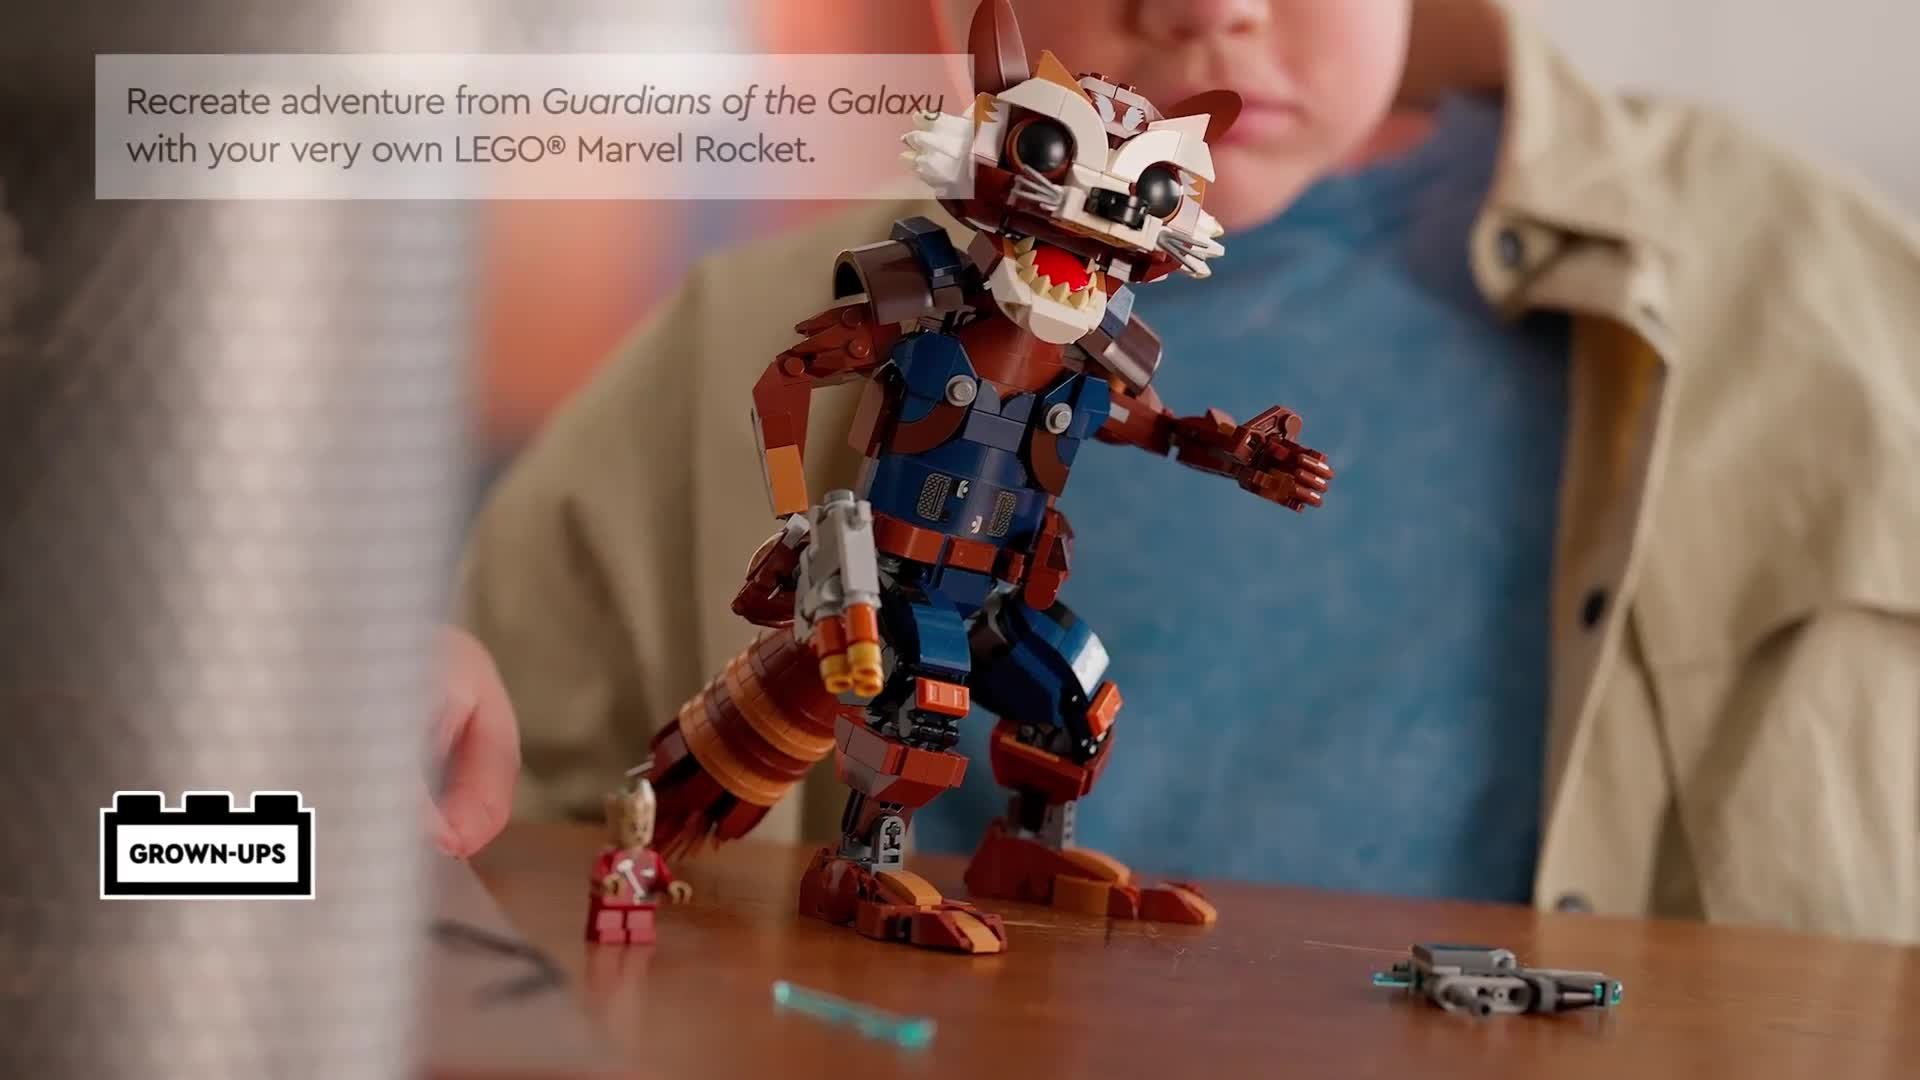 LEGO Marvel - Rocket y Bebé Groot - 76282, Lego Marvel Super Heroes